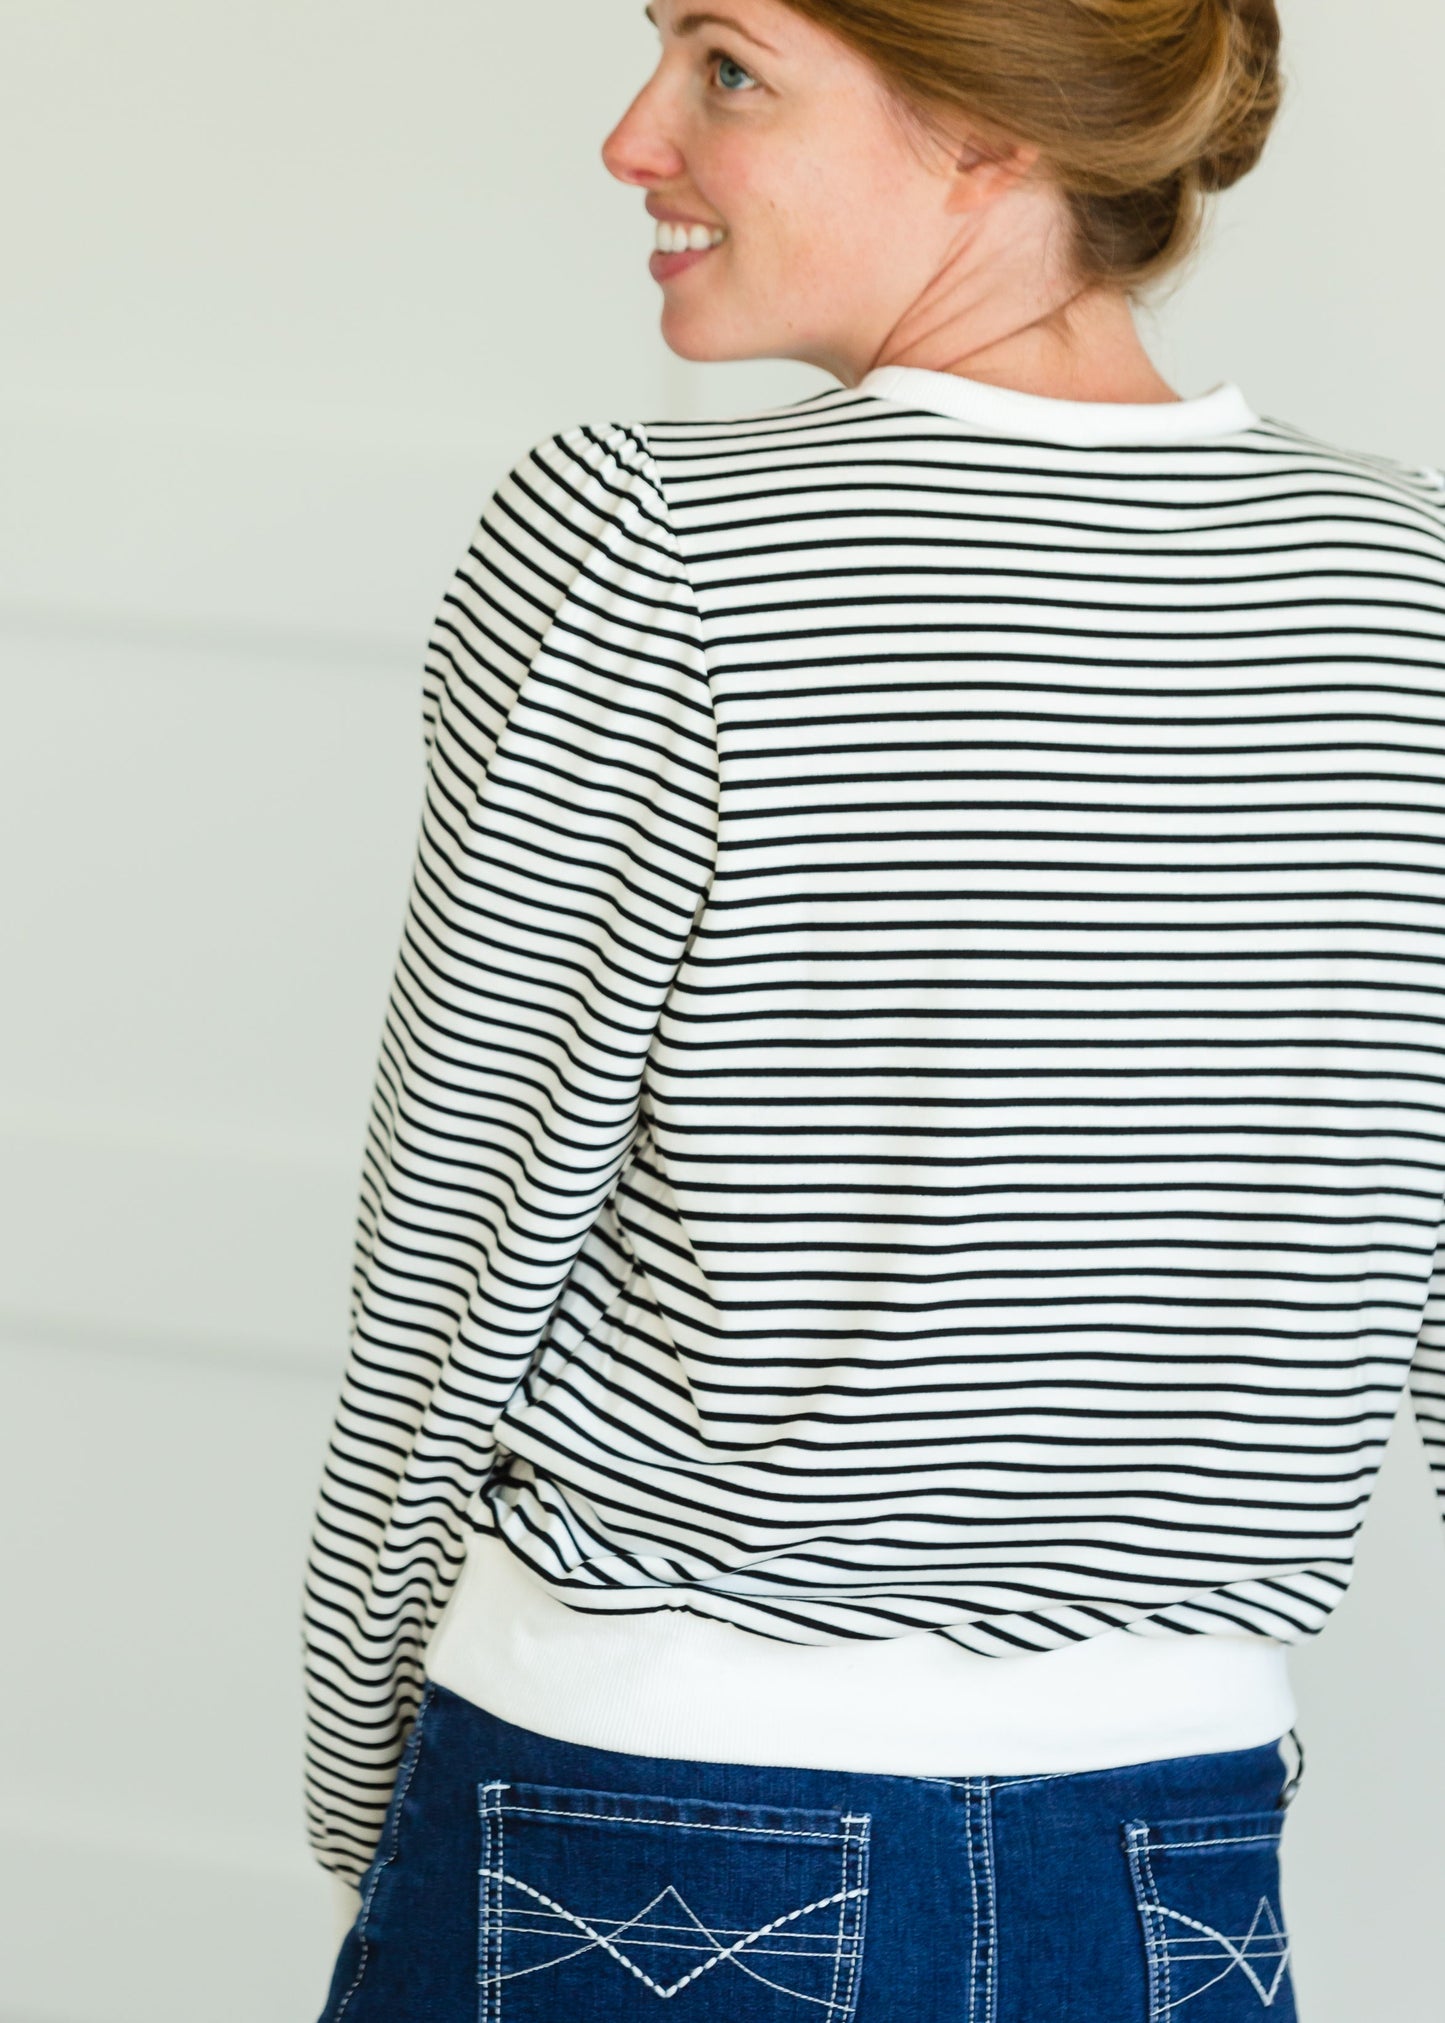 Ivory and Black Puff Sleeve Striped Sweatshirt - FINAL SALE Tops